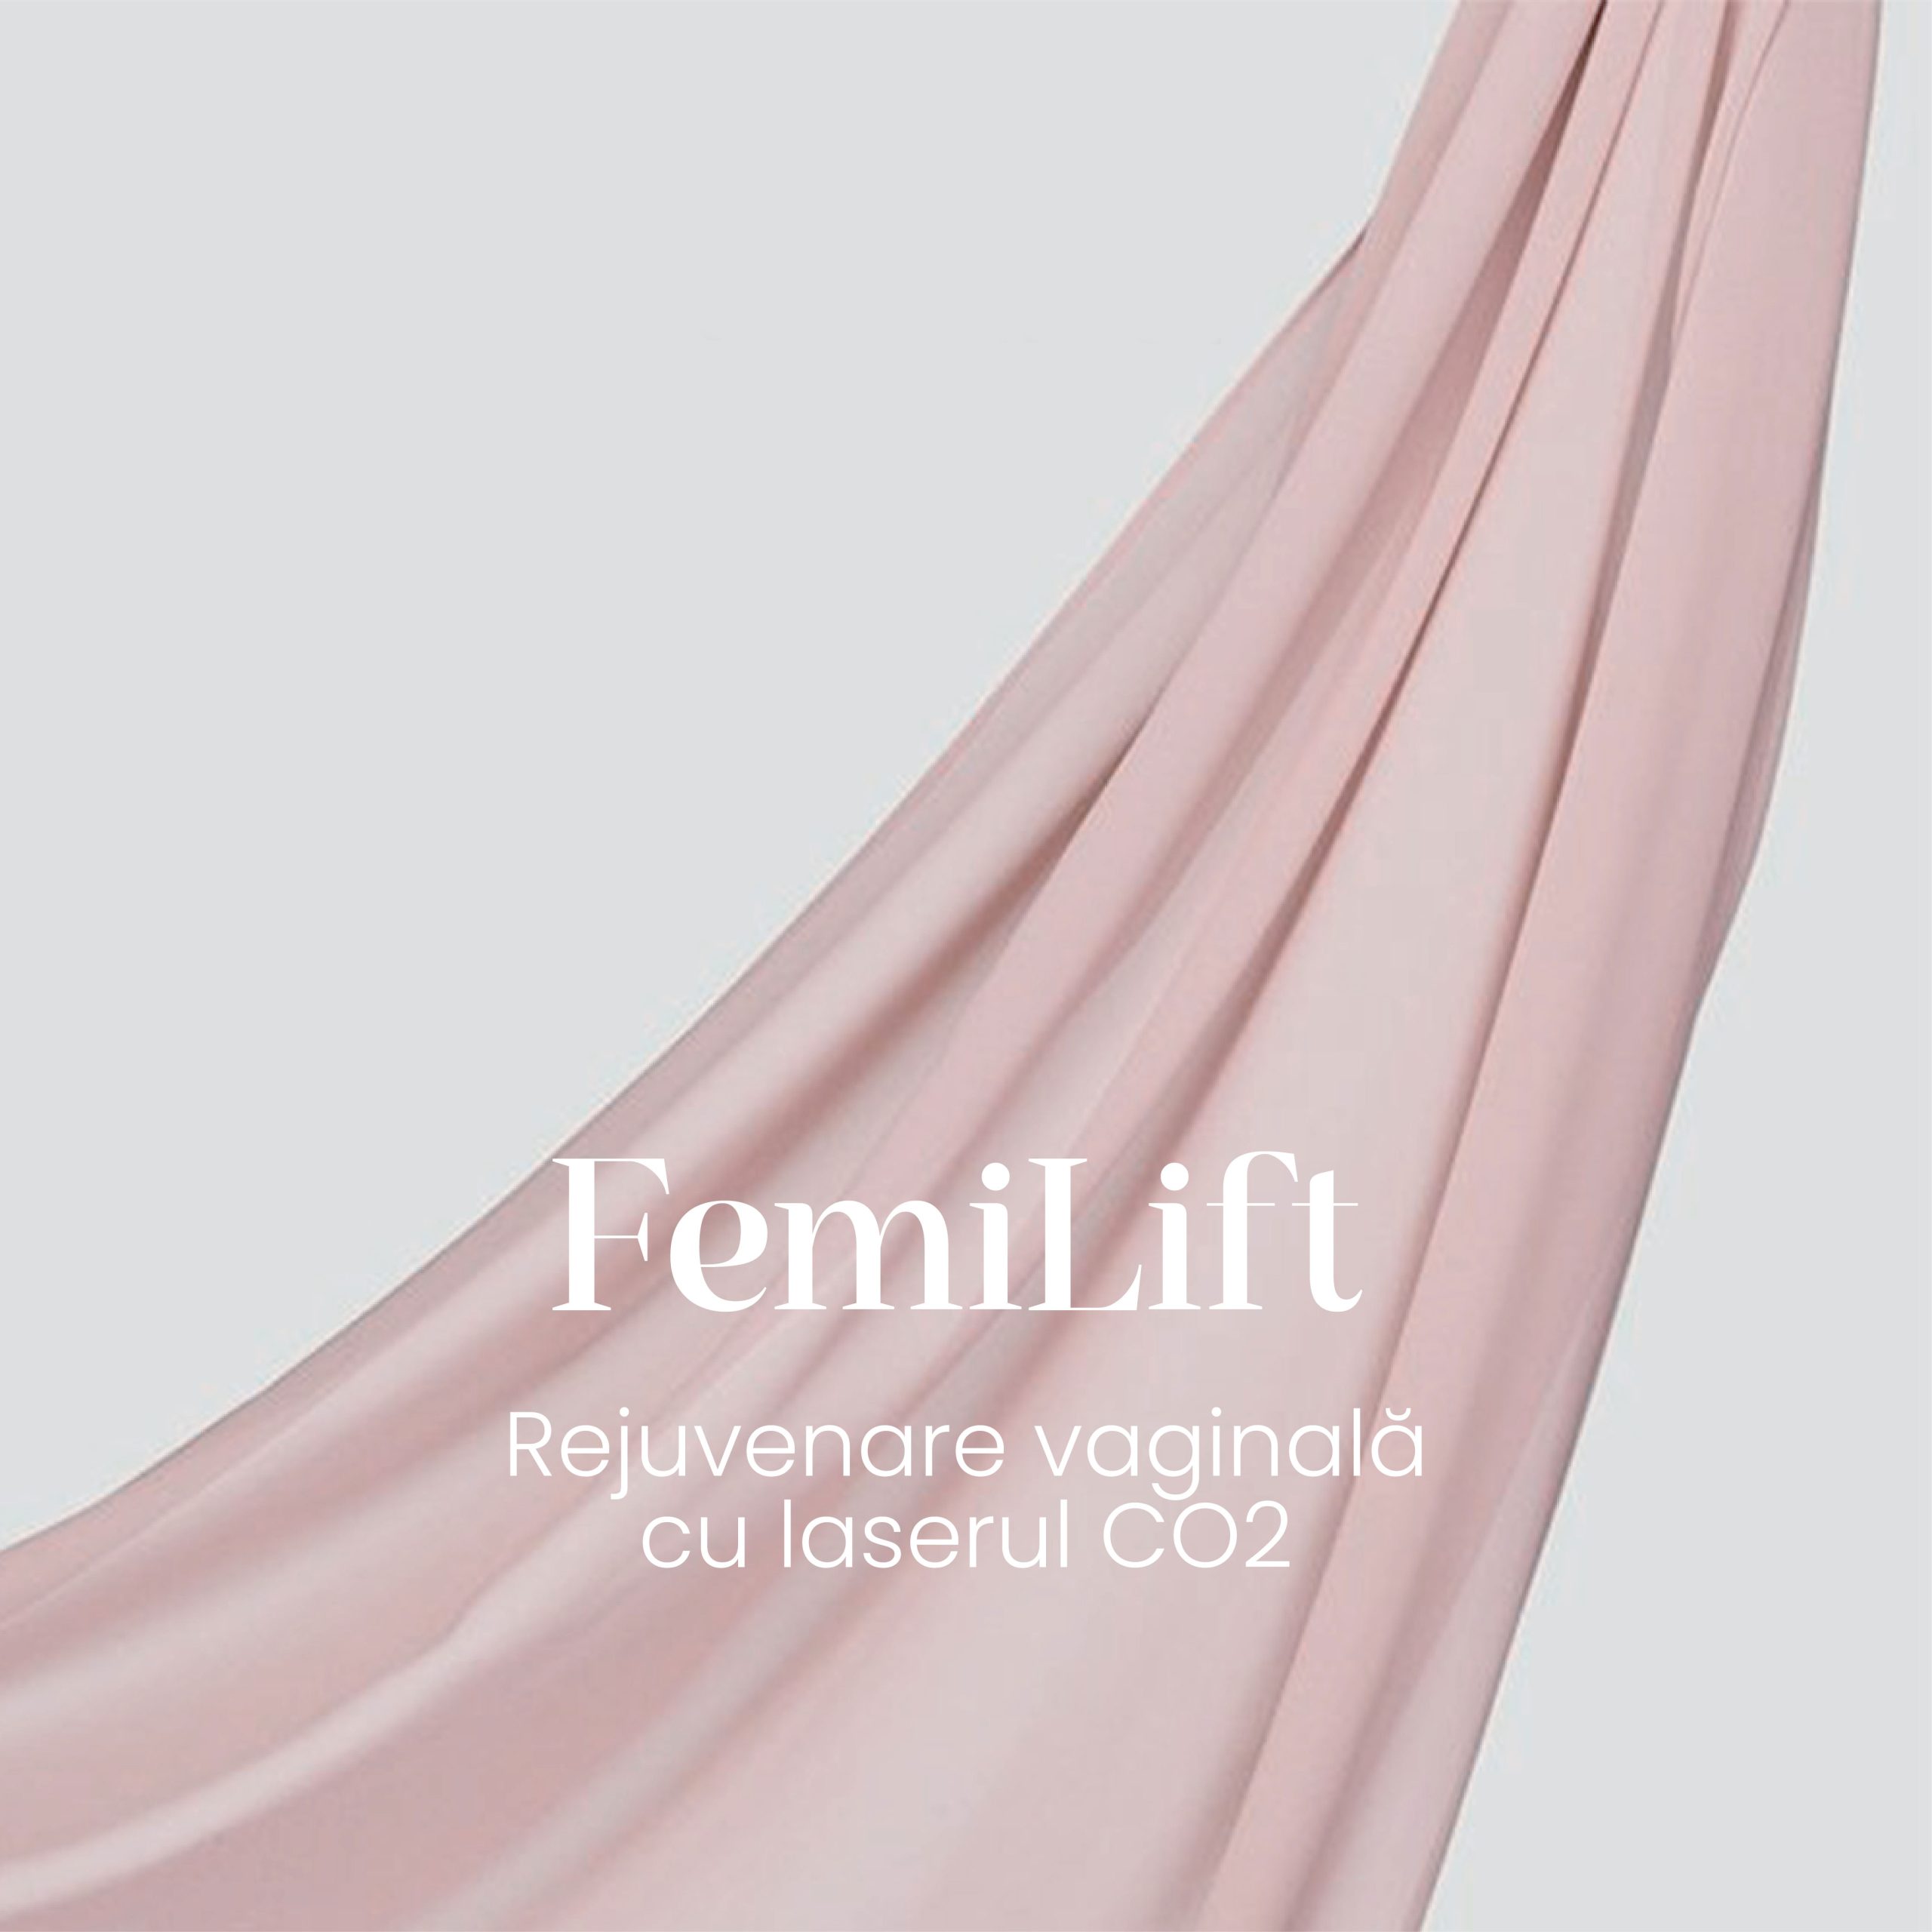 gyniclinique_femilift_rejuvenare-vaginala_home